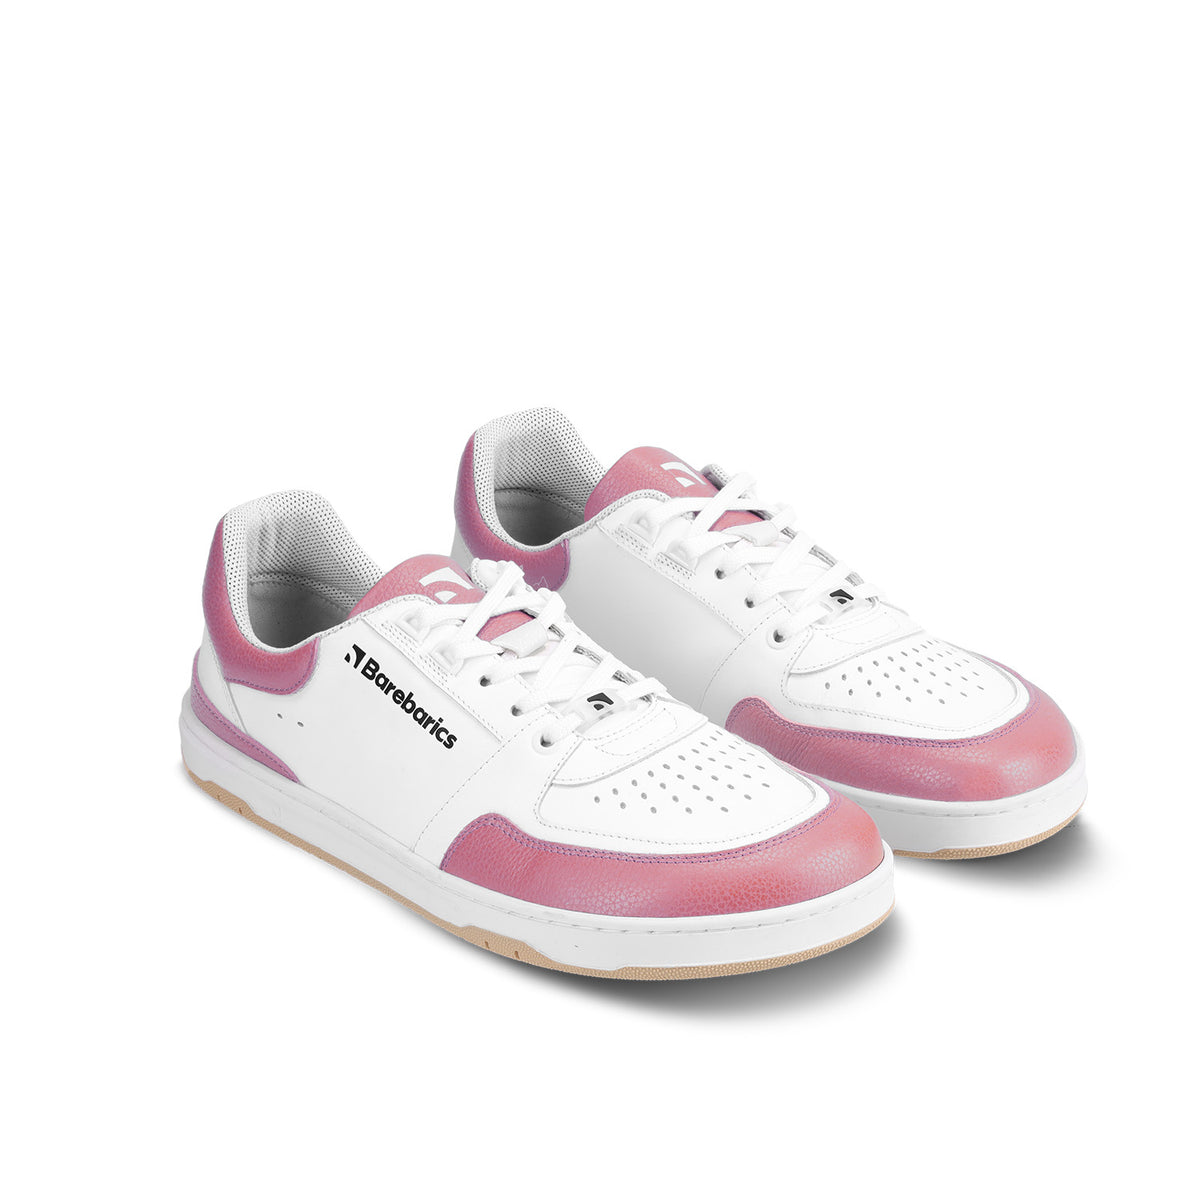 Barefoot Sneakers Barebarics Wave - White & BubbleGum Pink 4  - OzBarefoot